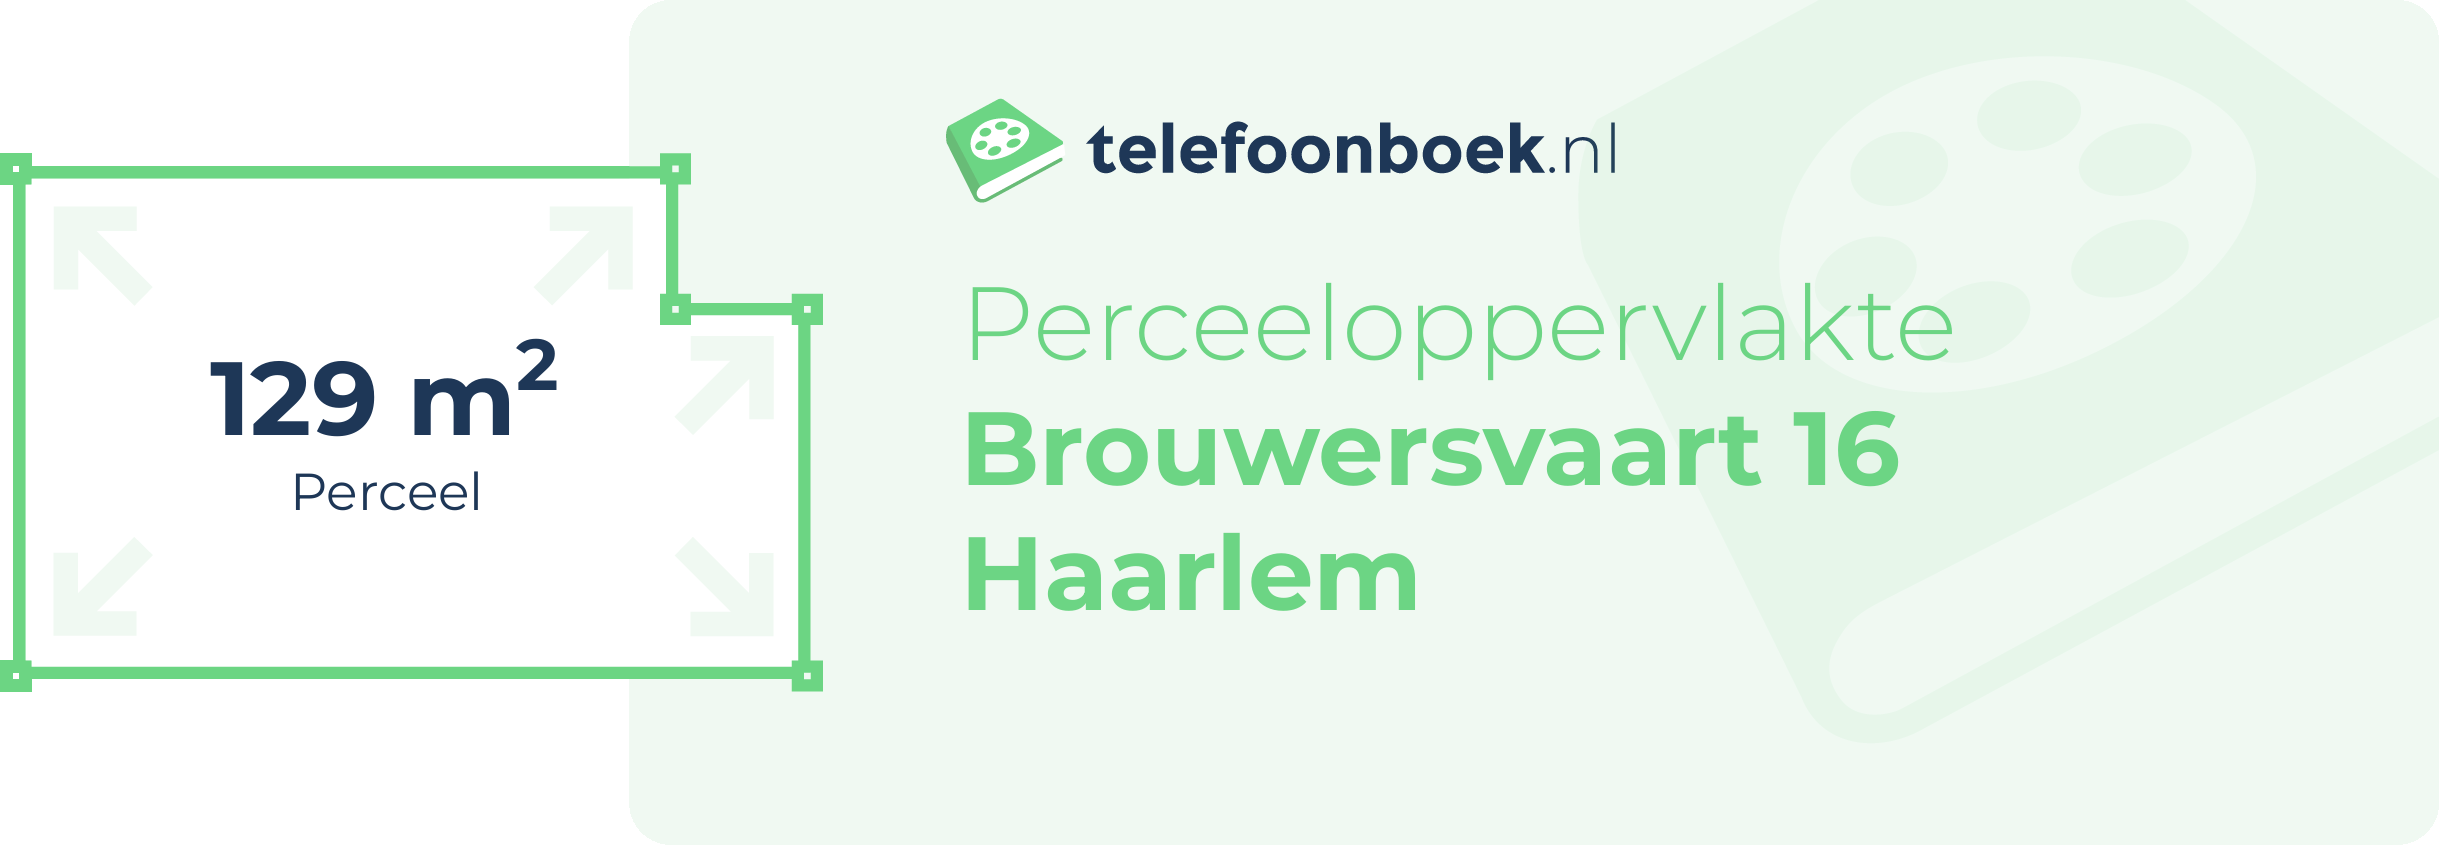 Perceeloppervlakte Brouwersvaart 16 Haarlem